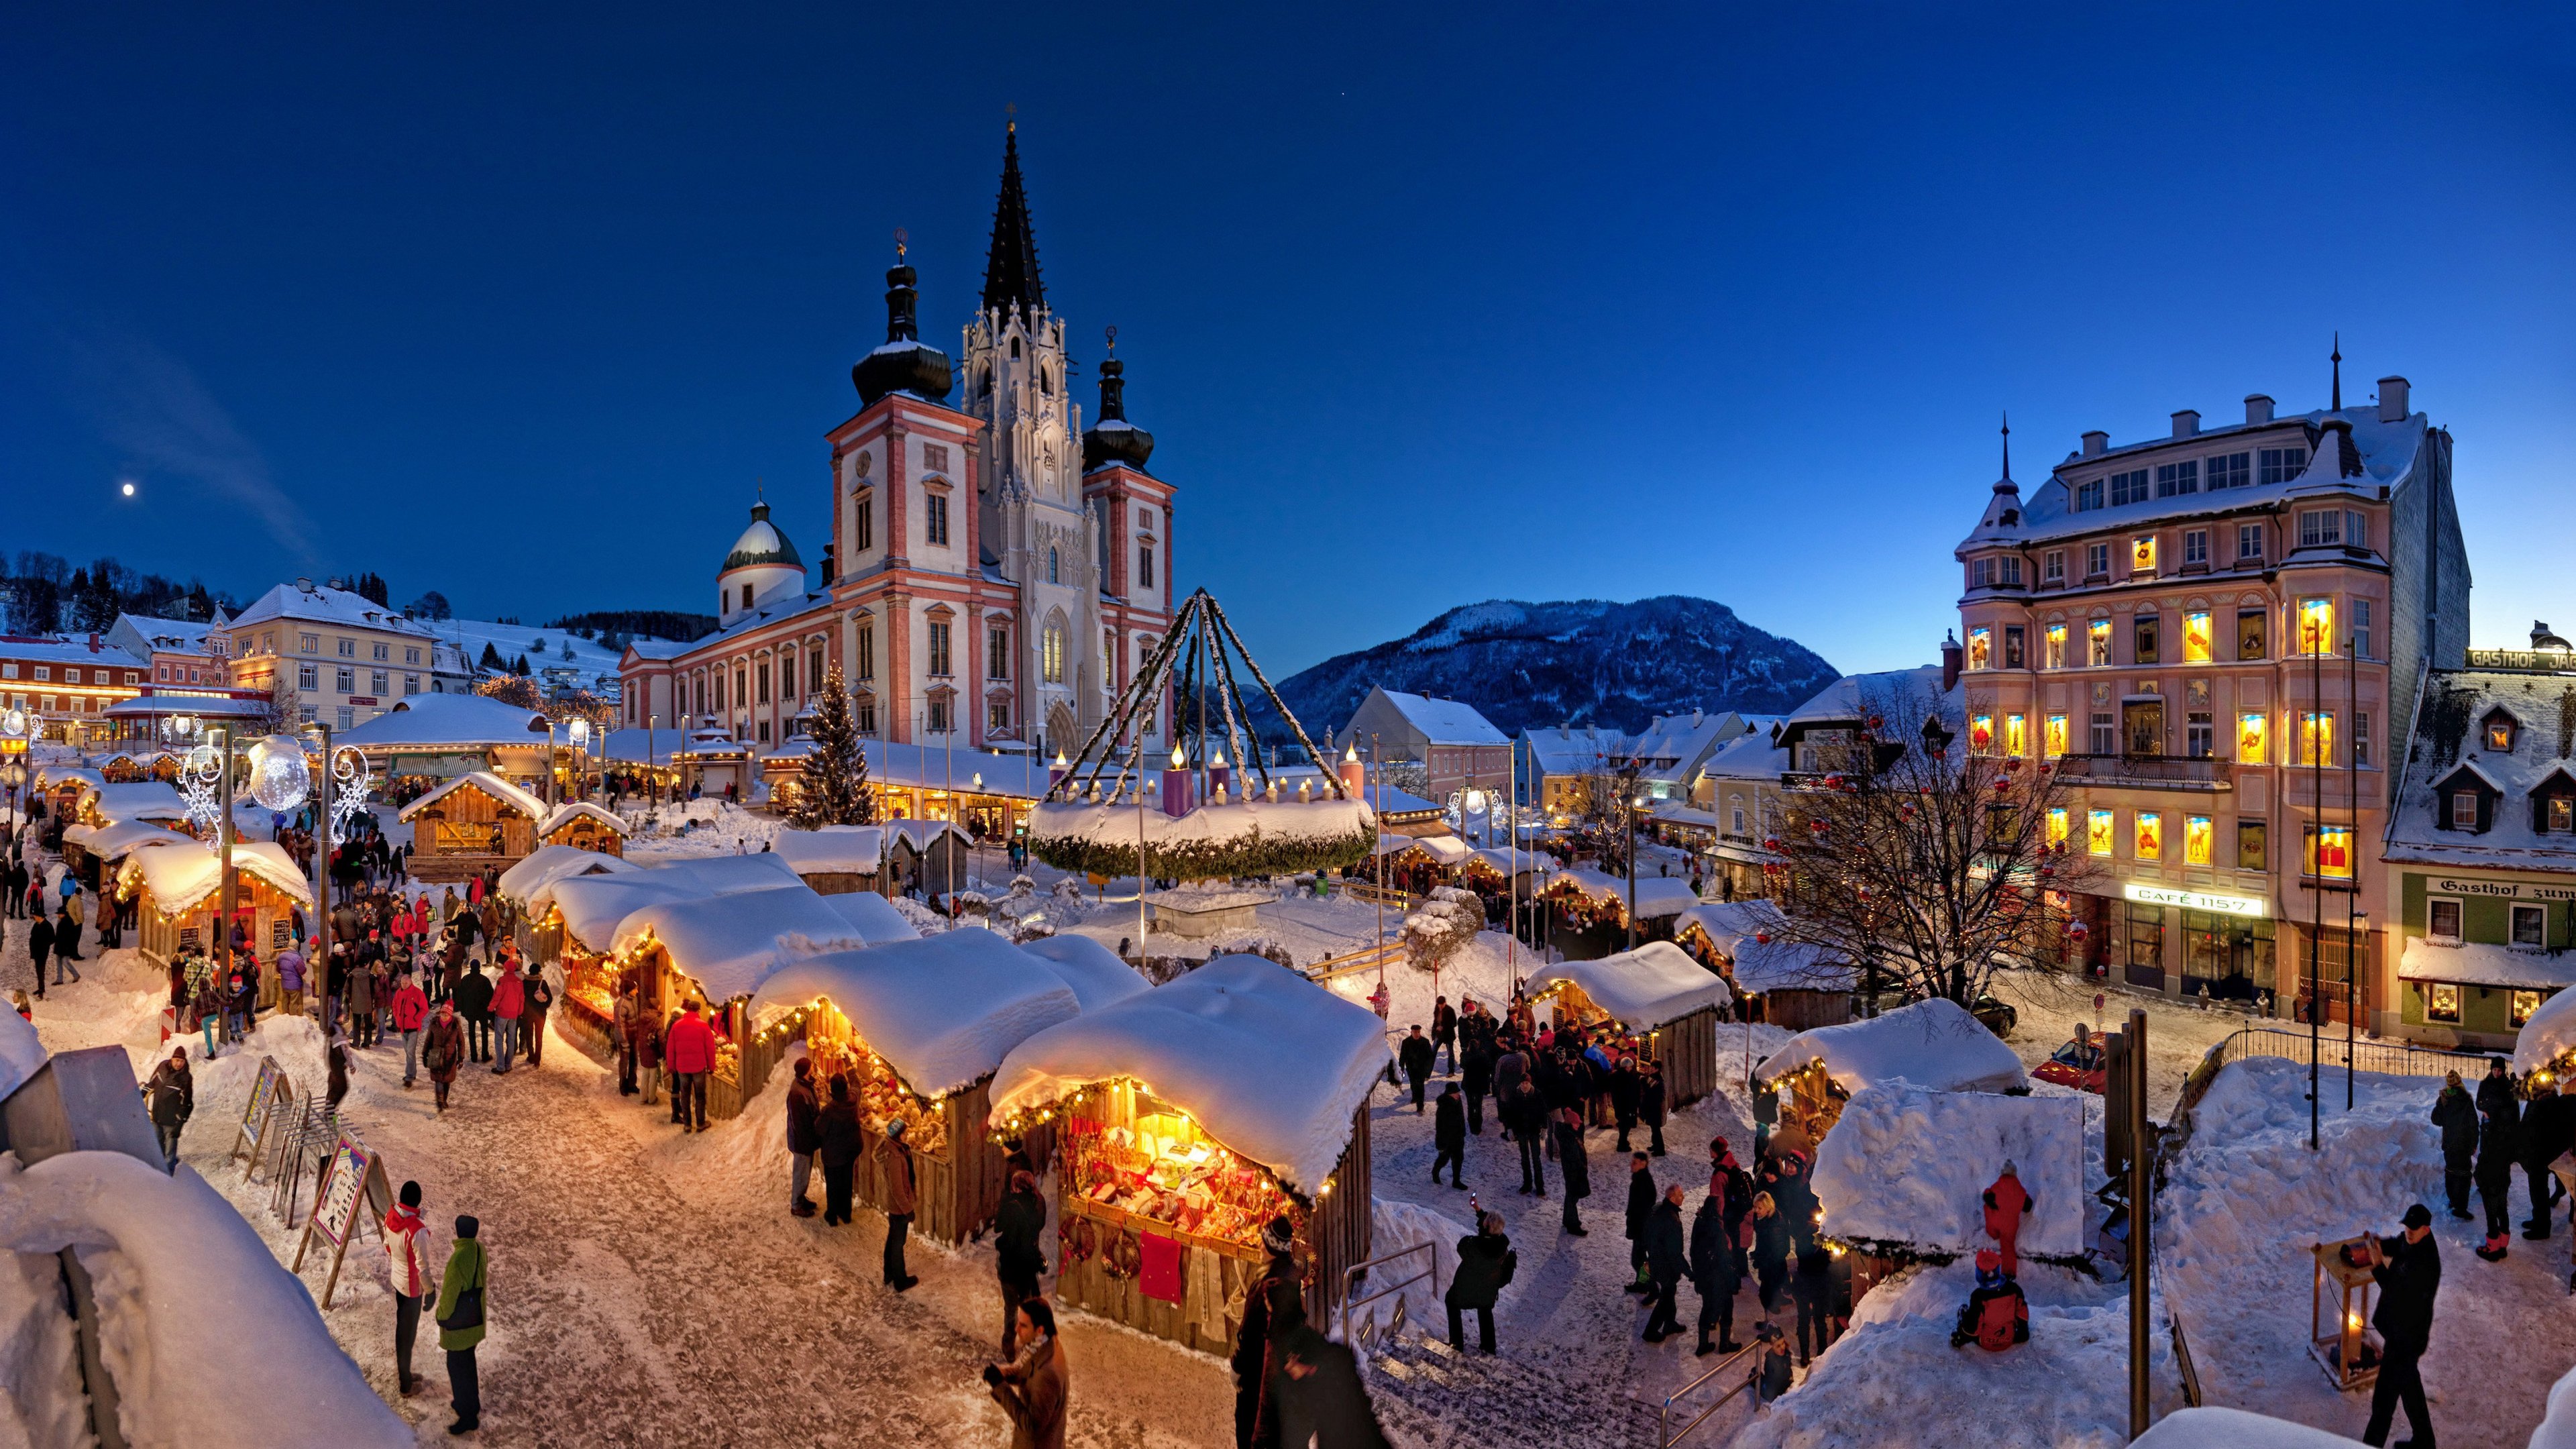 light, decoration, night, christmas, holiday, building, city, market, people, snow, square